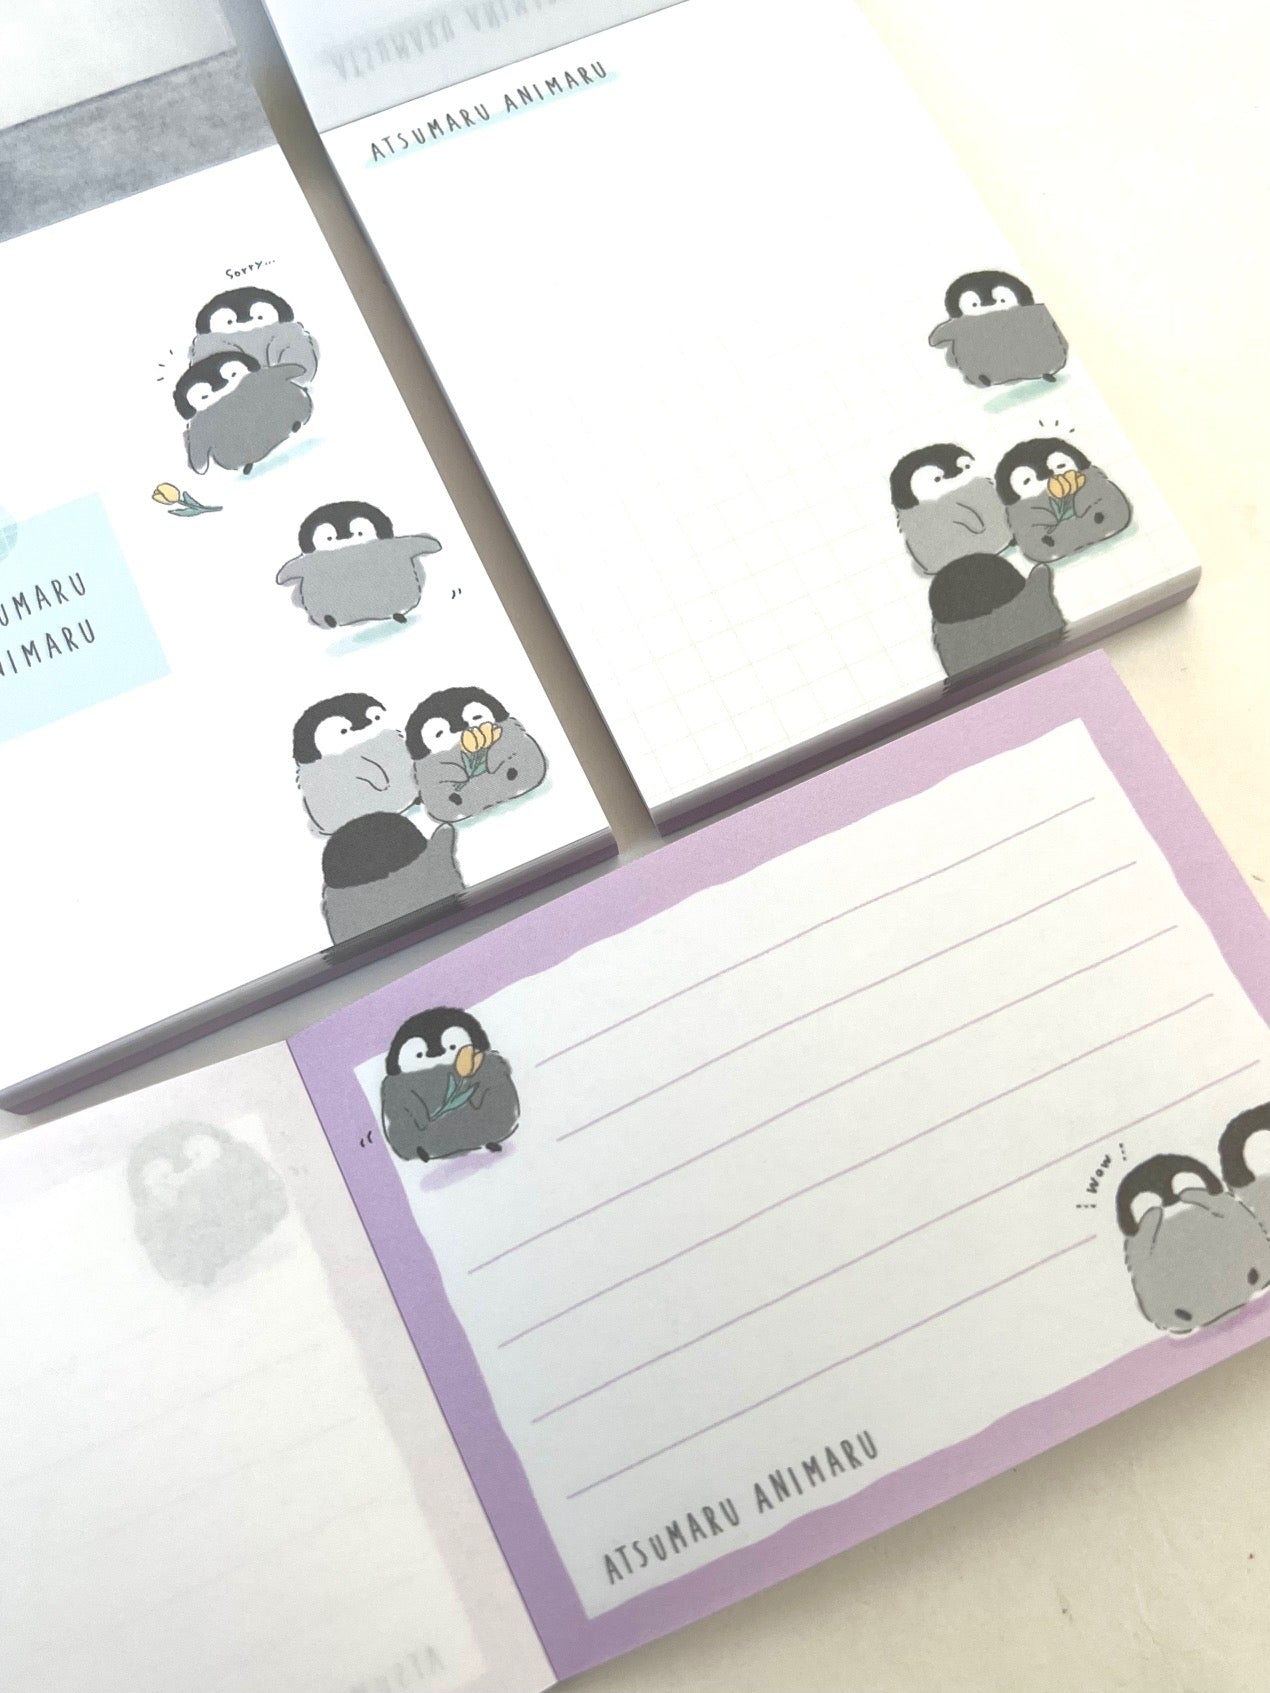 X 105627 Penguin Party Atsumaru Animaru Mini Notepad-DISCONTINUED